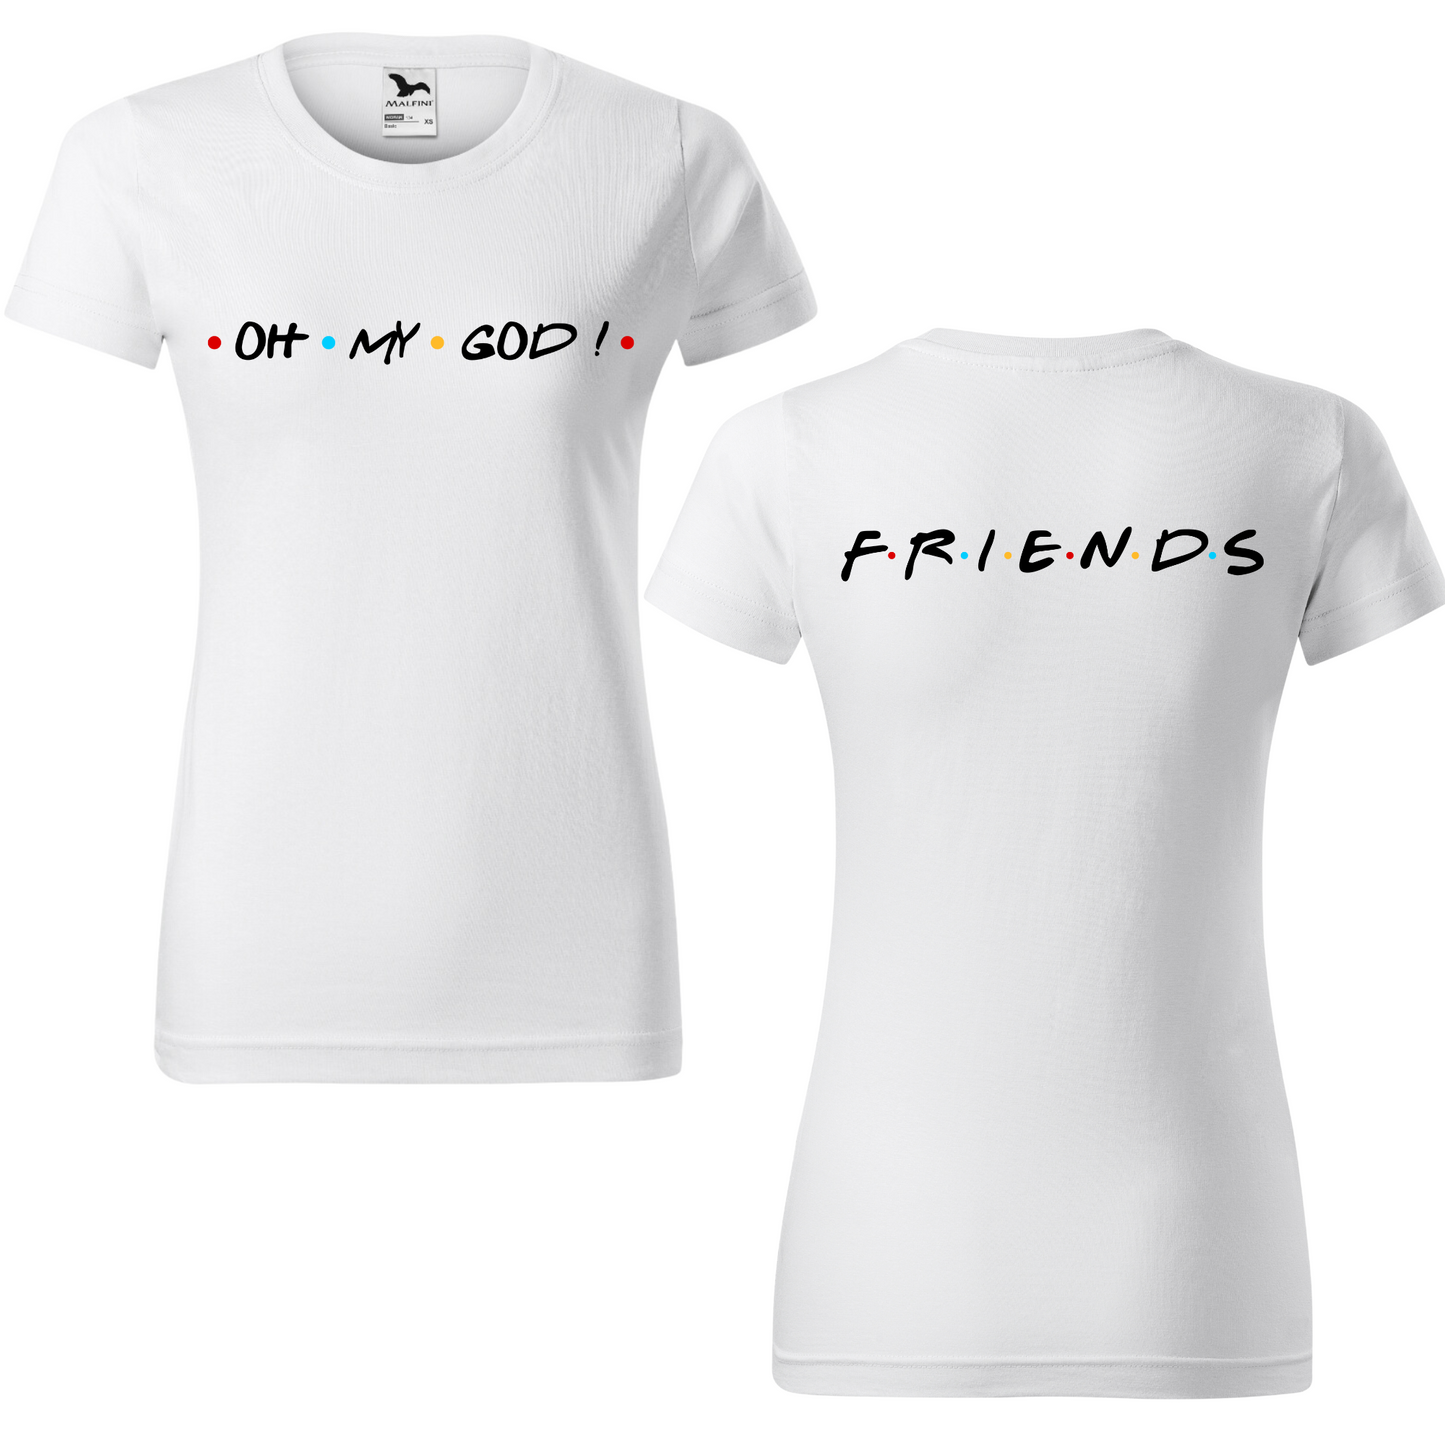 Tricoul cu expresia iconică "Oh My God" din 'Friends'.